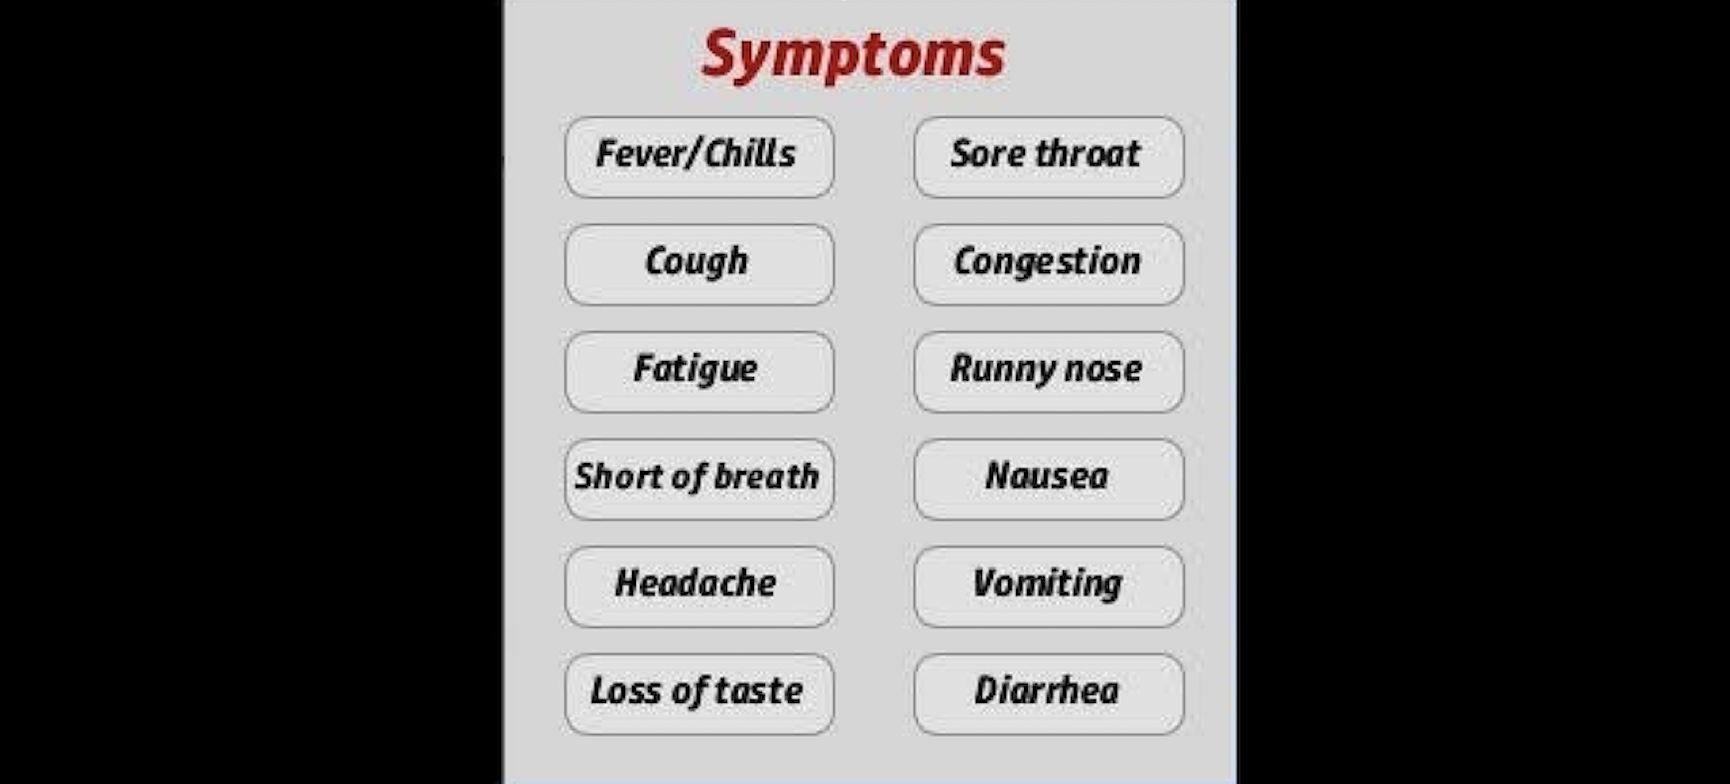 IMAGE OF SYMPTOMS